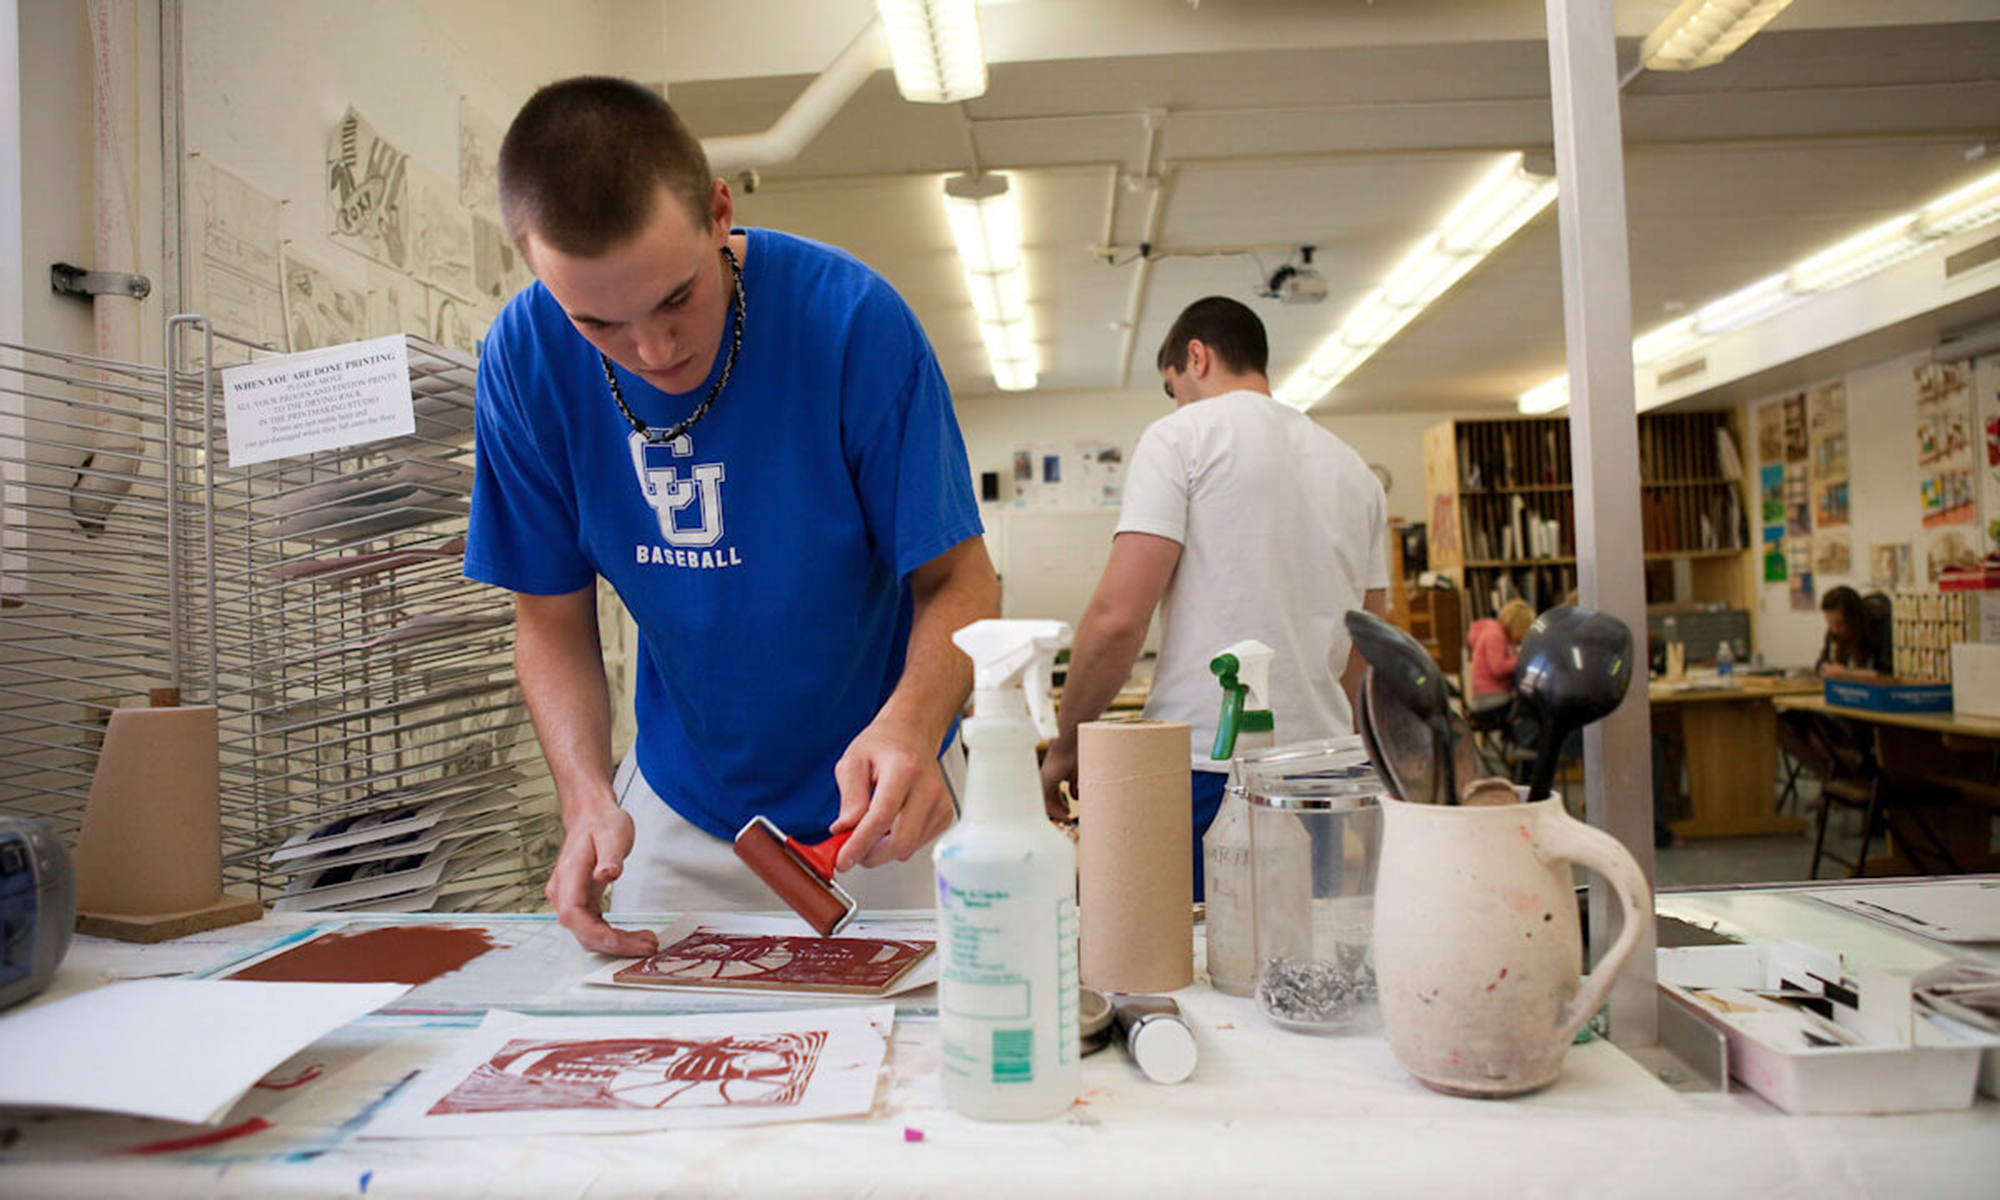 A CUW student creates artwork at Concordia.